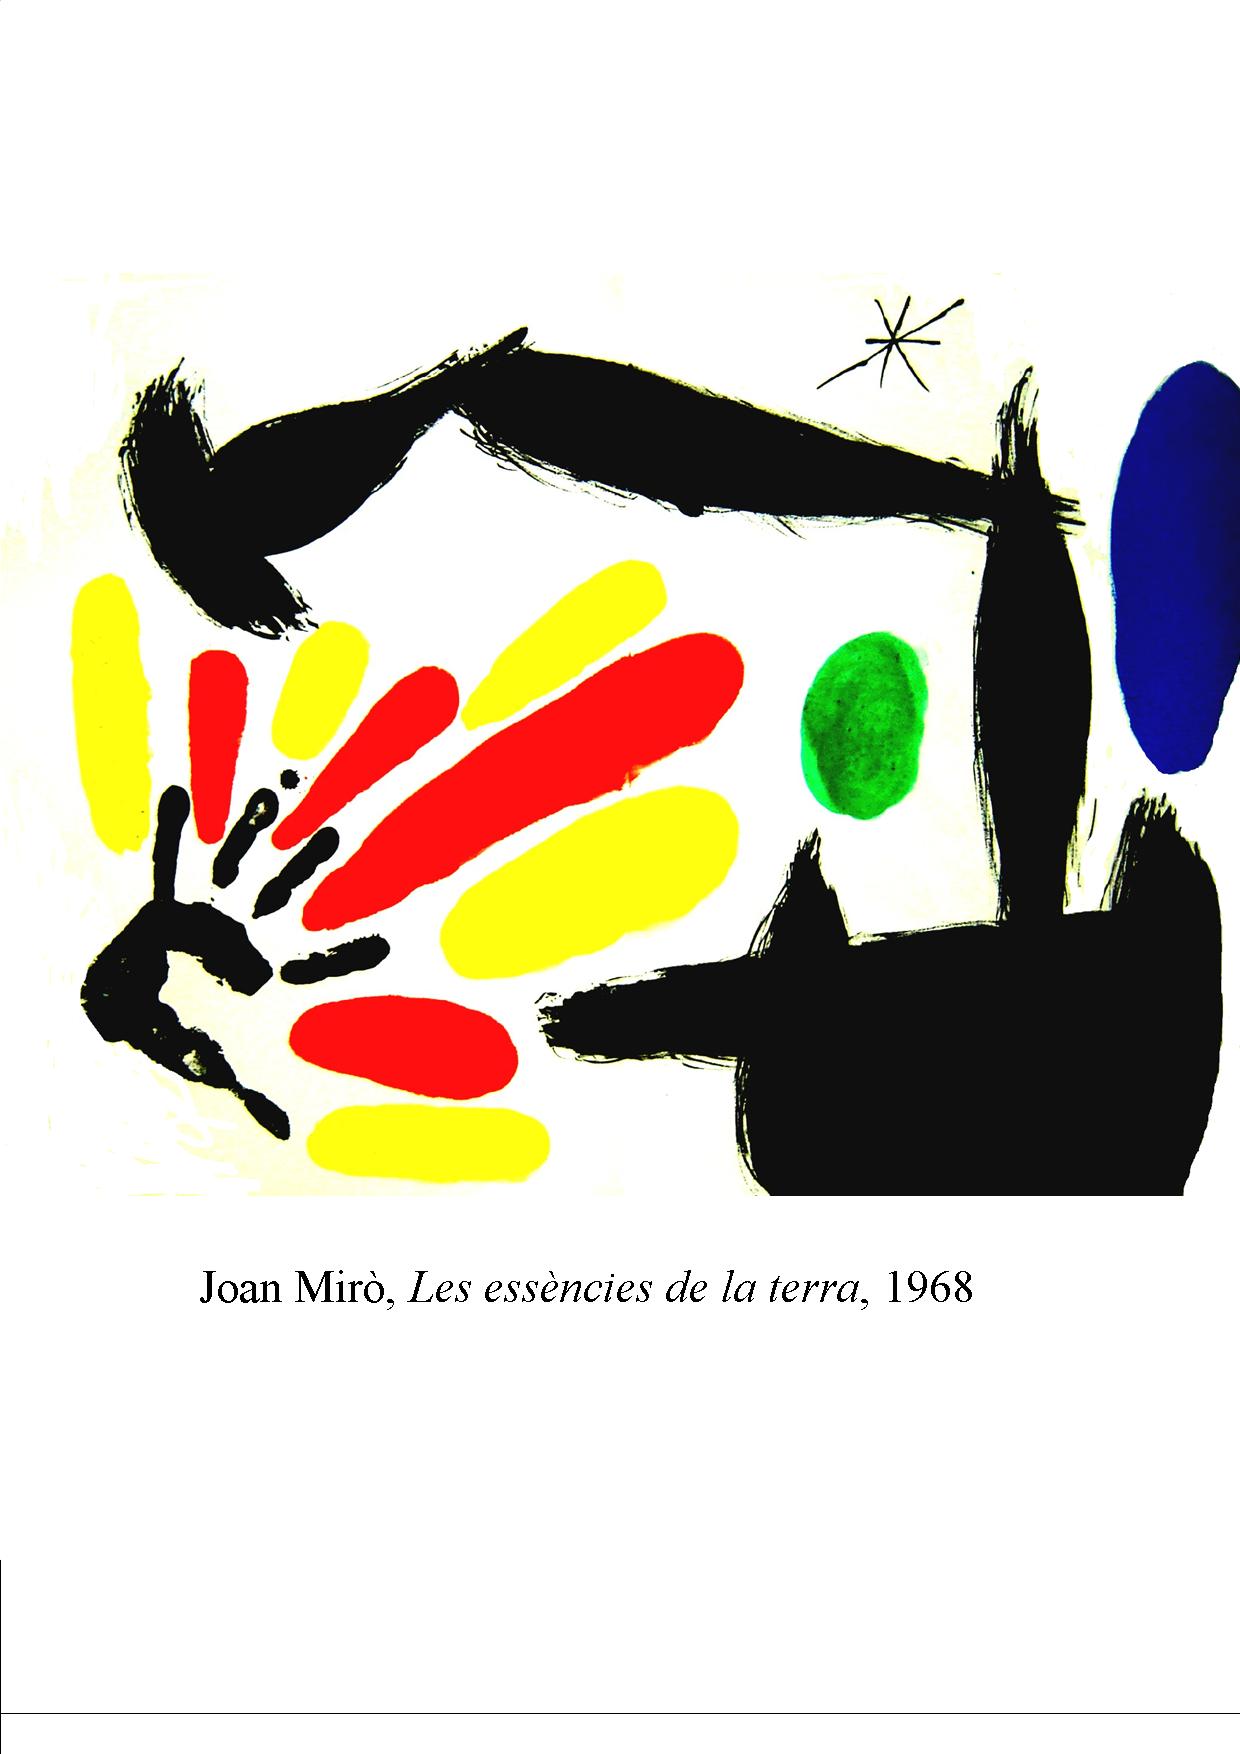 Joan Miró – Le essenze della terra